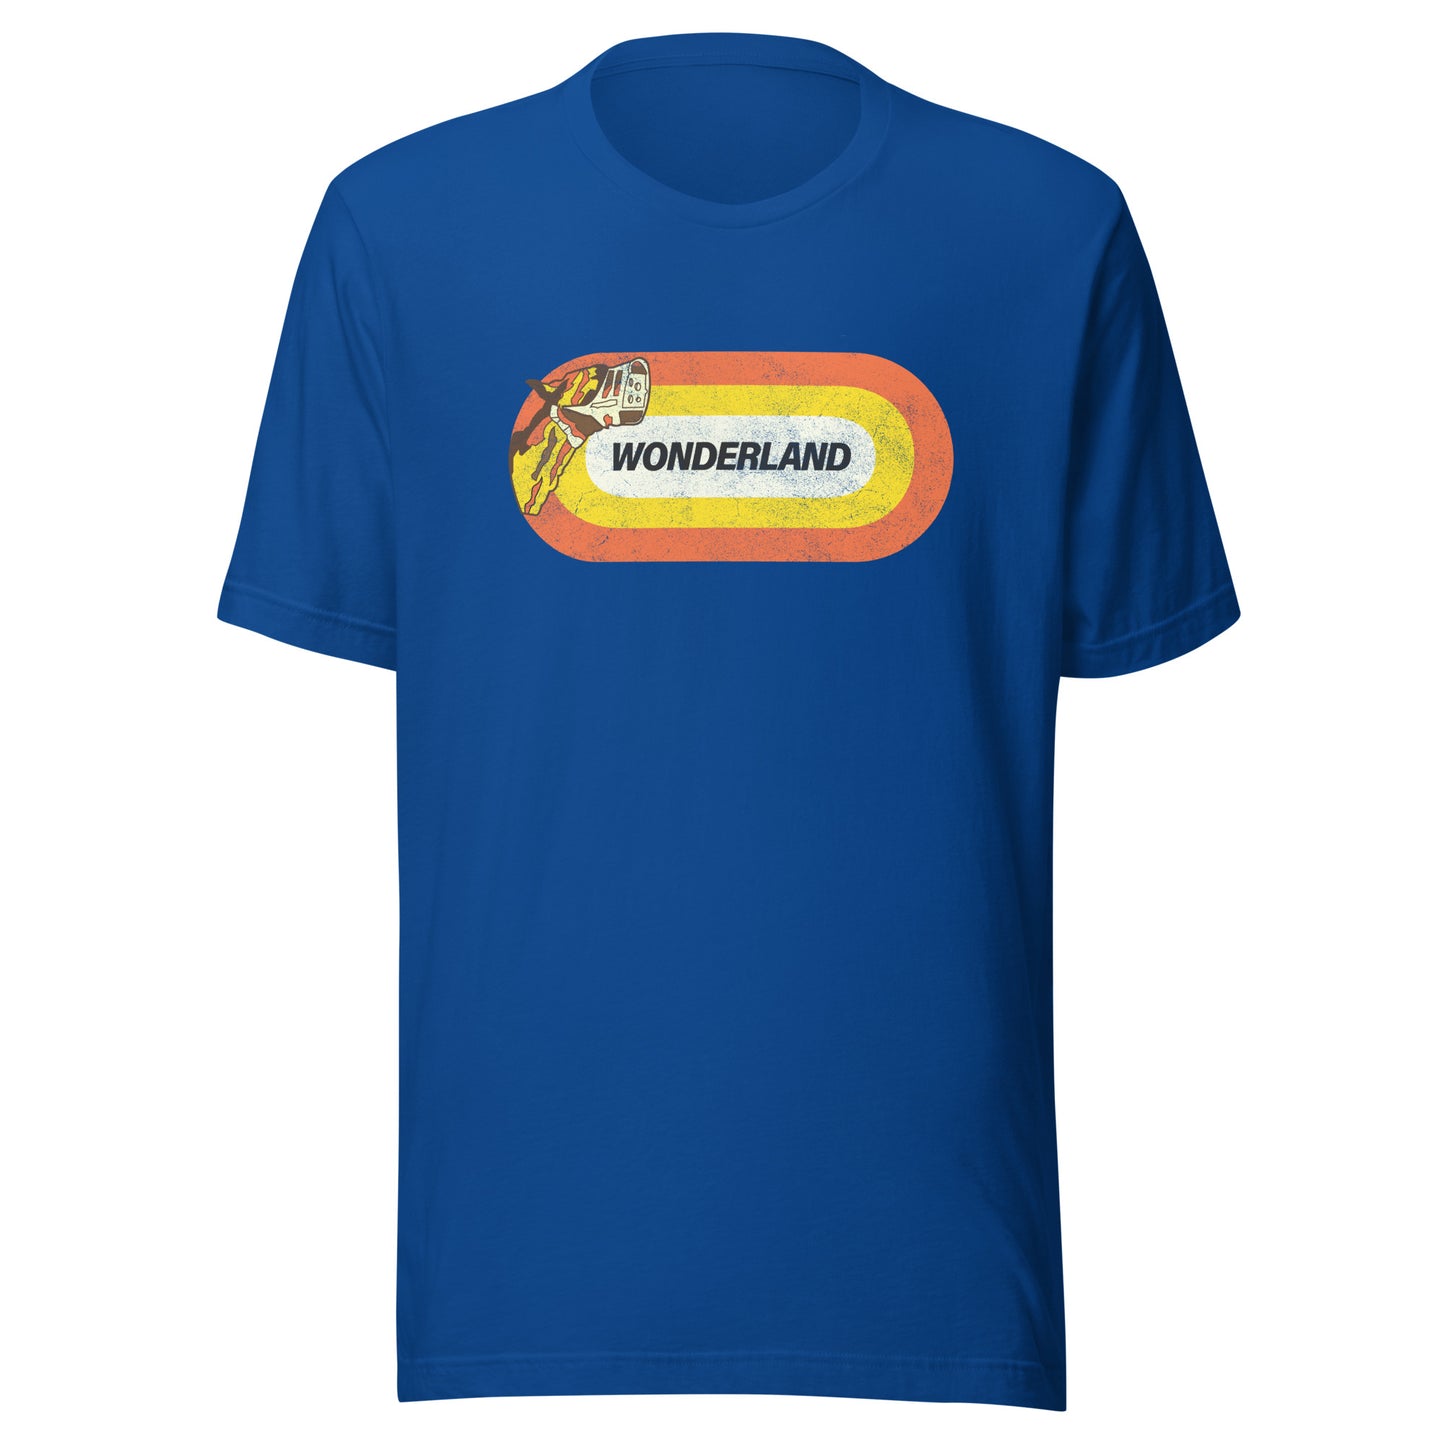 Wonderland Park T-Shirt - Revere, MA | Retro Greyhound Racing Tee